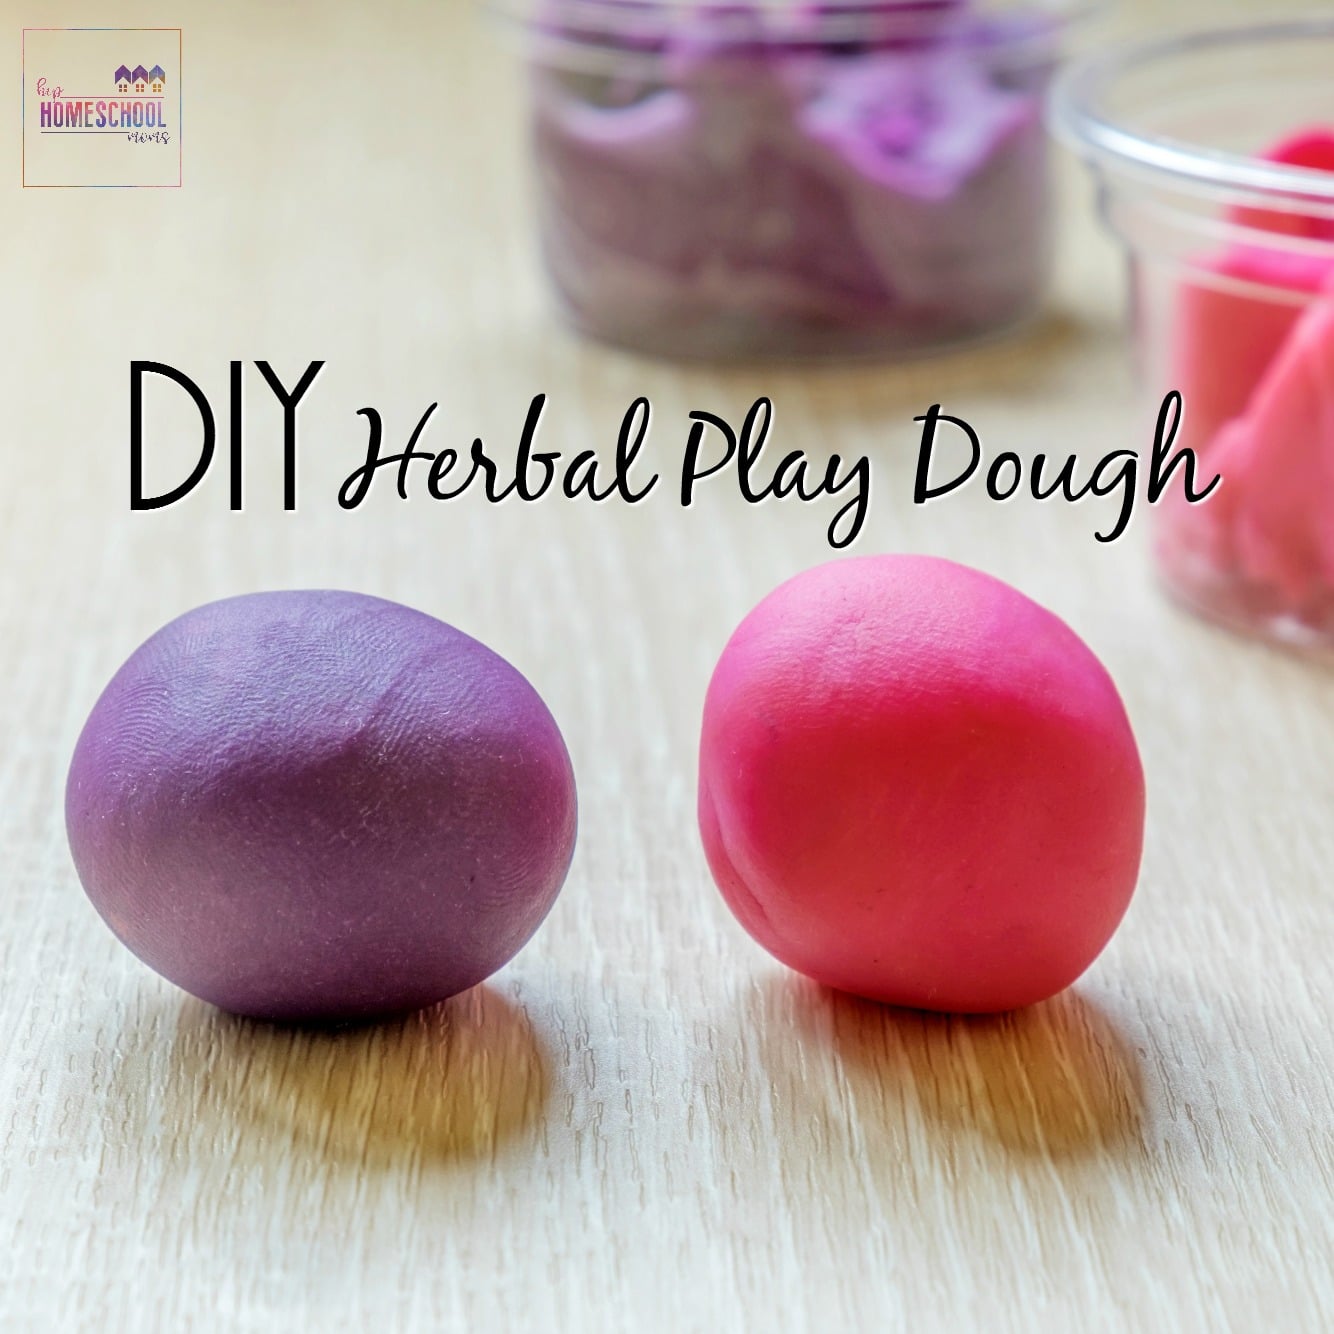 DIY Herbal Play Dough to Teach Phonics